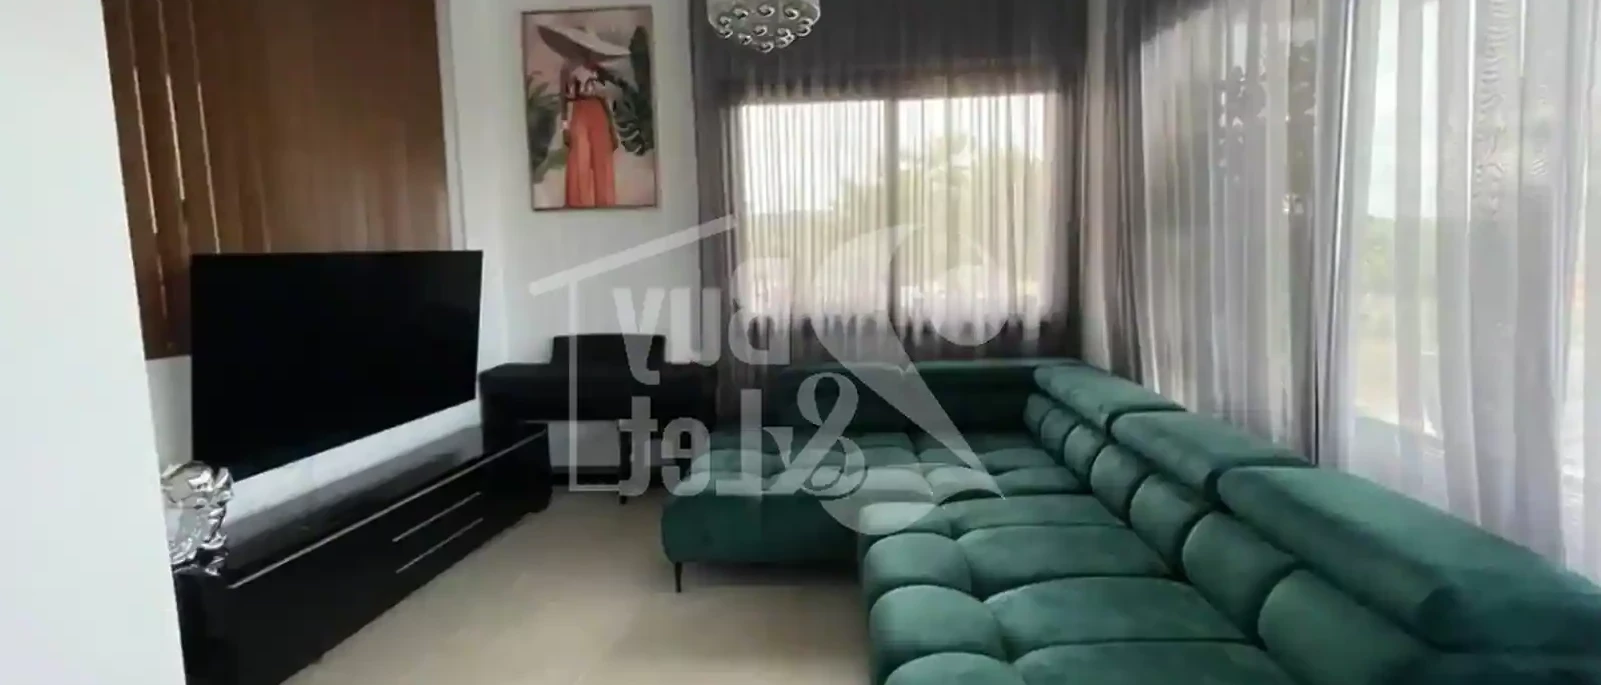 5-bedroom villa fоr sаle €1.000.000, image 1